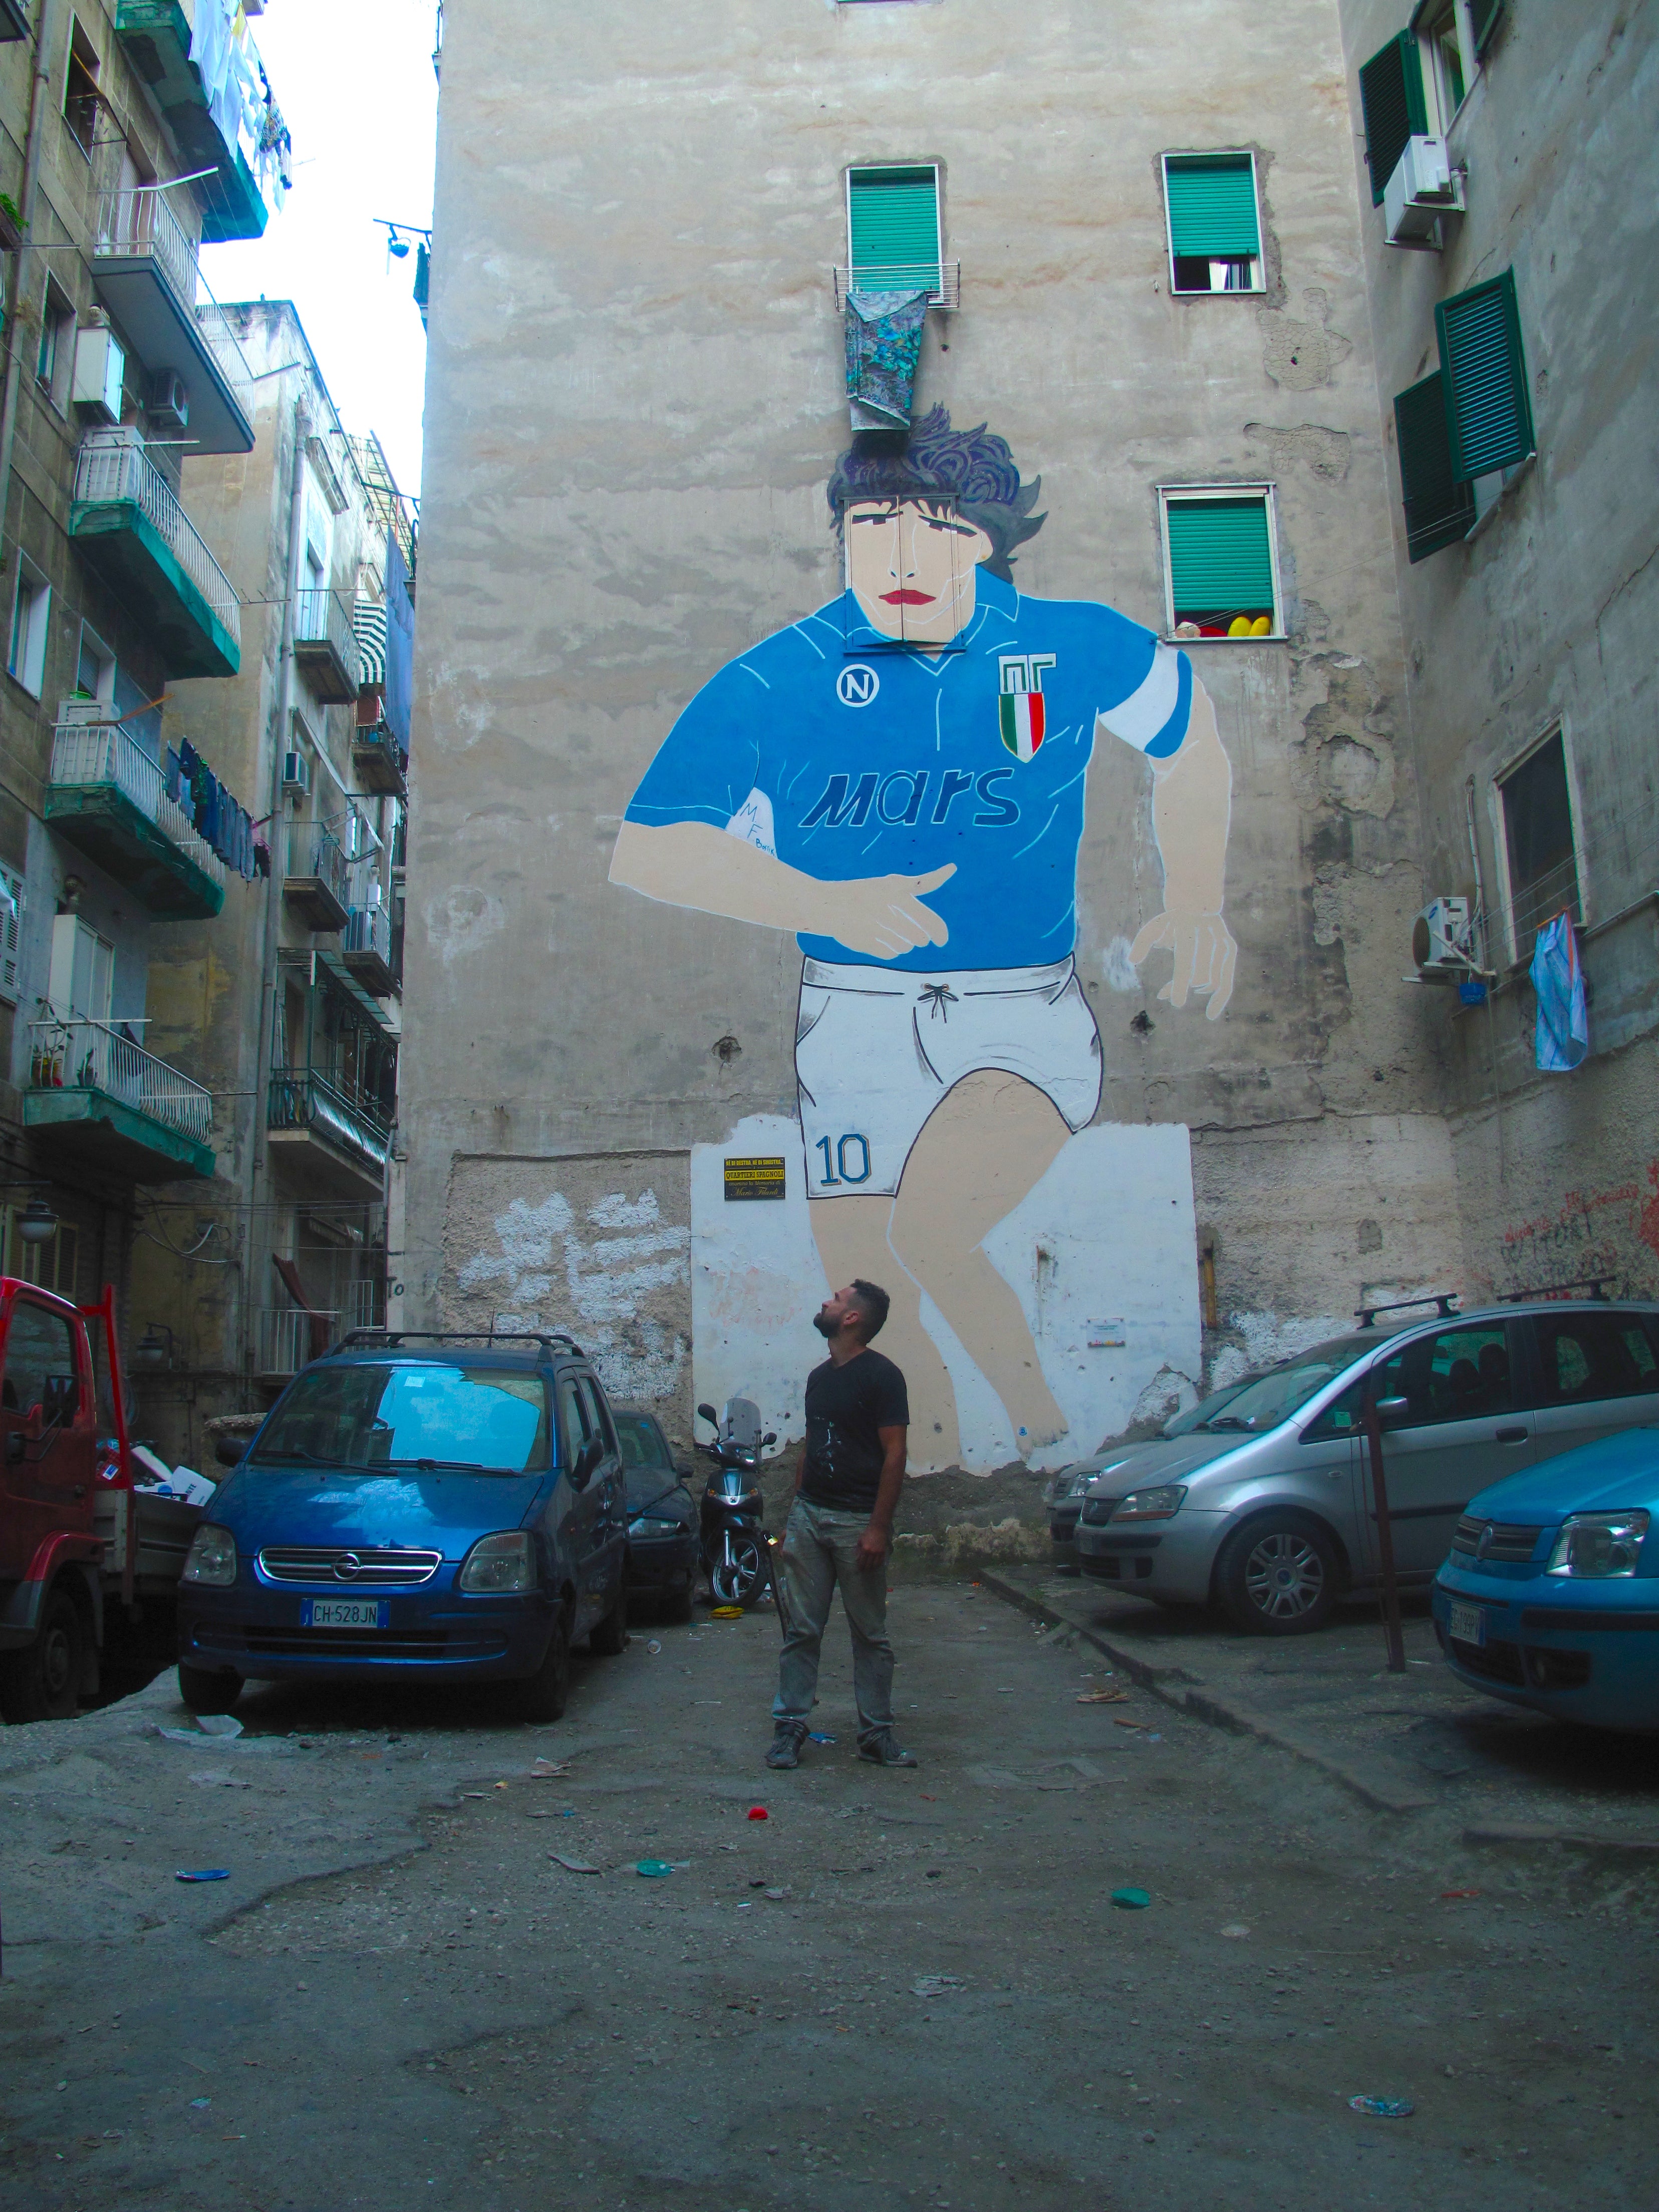 Diego Maradona mural by Salvatore Iodice in Naples